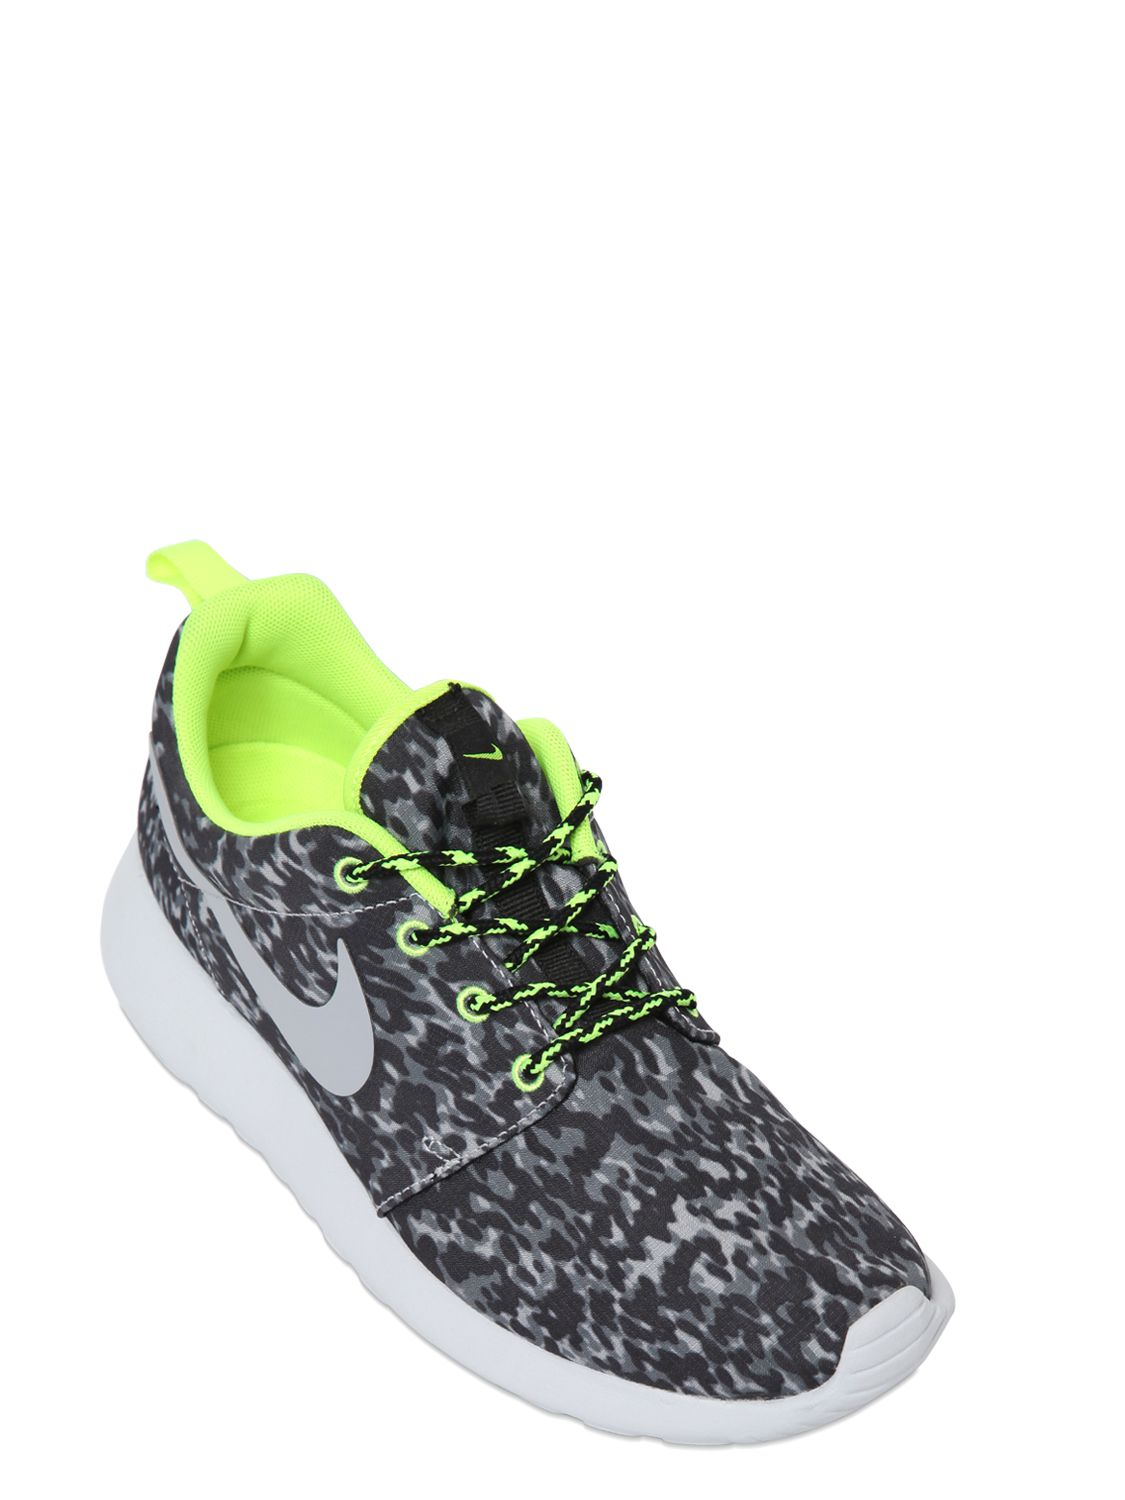 Leopard Print Nikes Roshe Outlet, SAVE 43% - piv-phuket.com